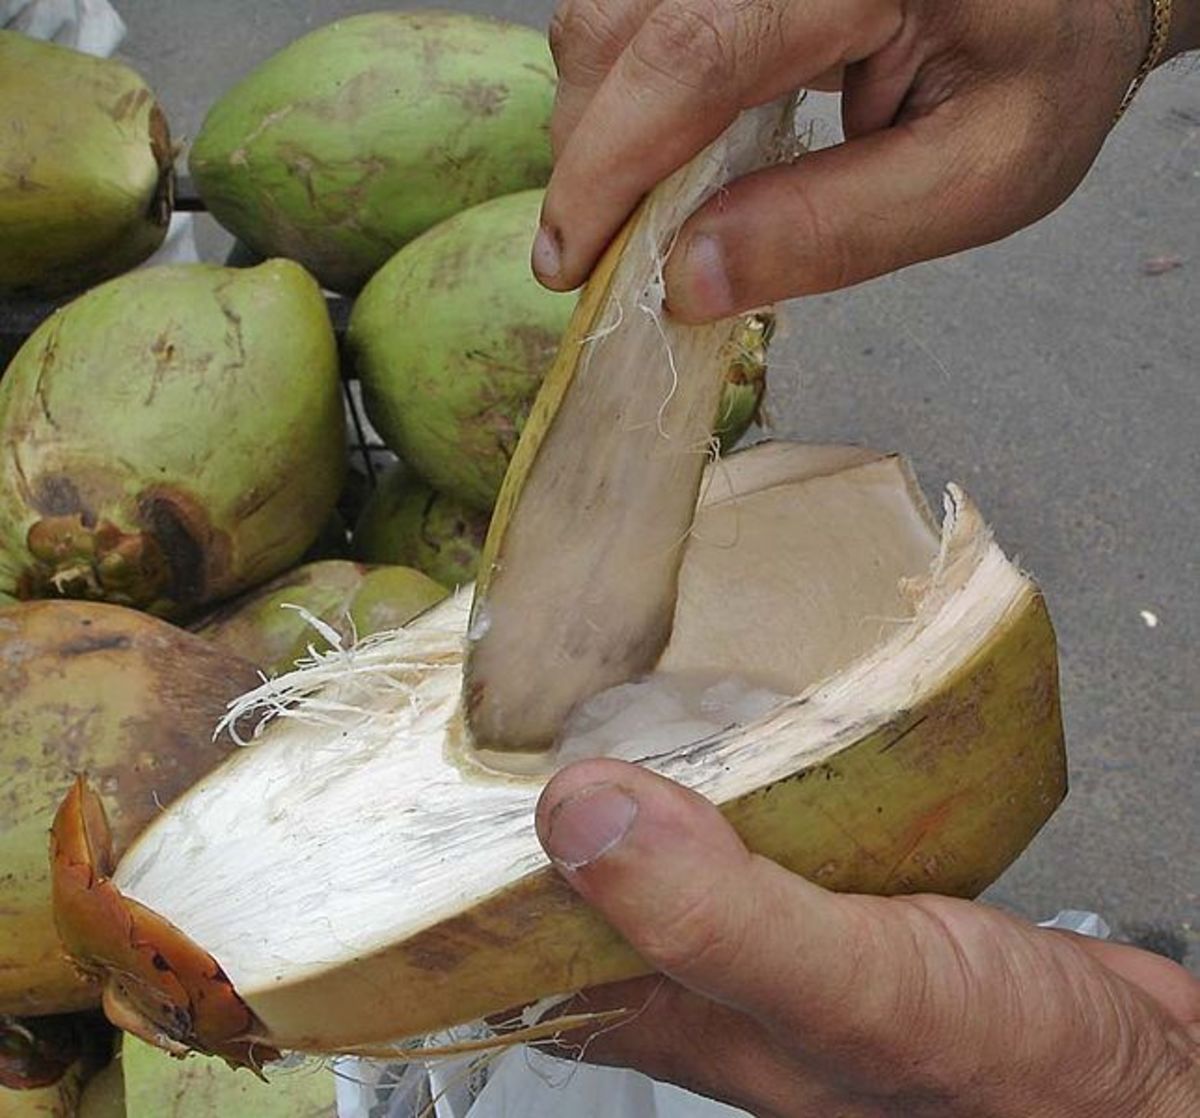 health-benefits-of-coconut